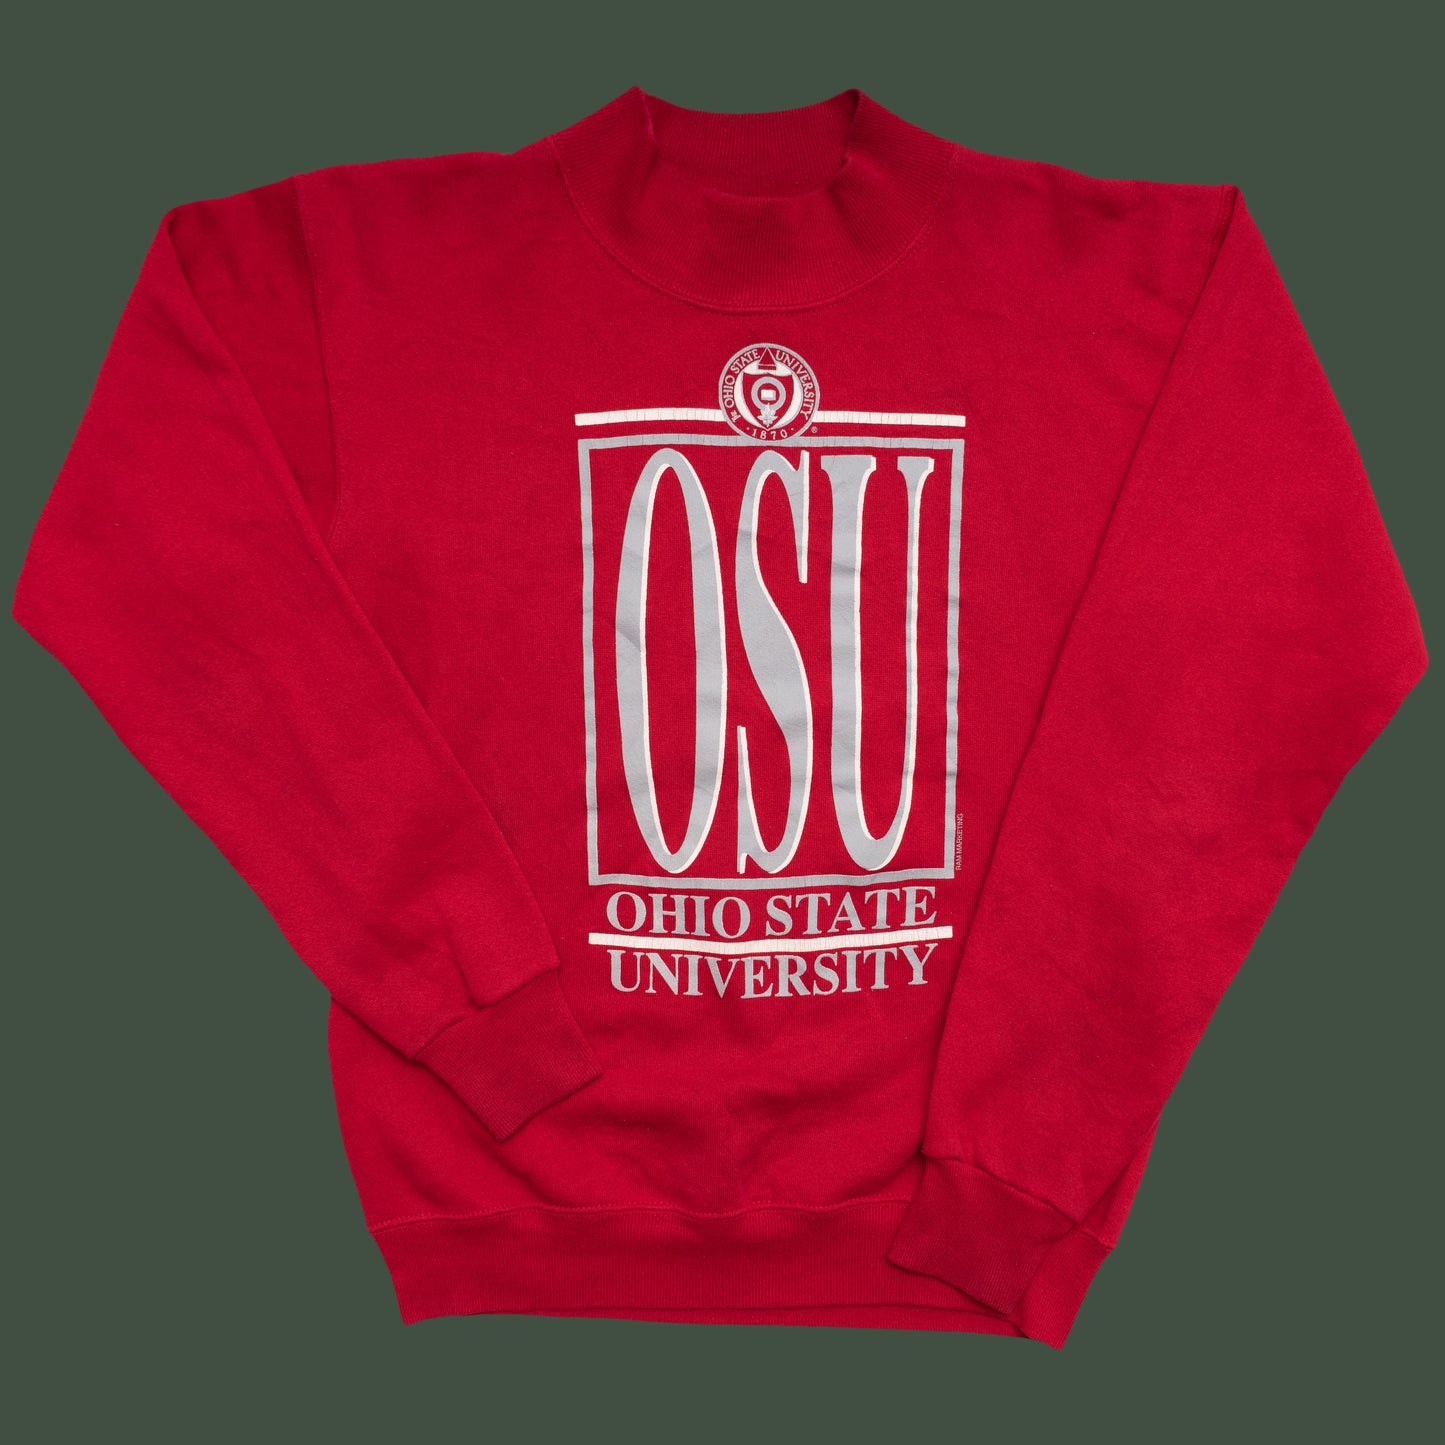 Ohio State University Mockneck Sweater, M